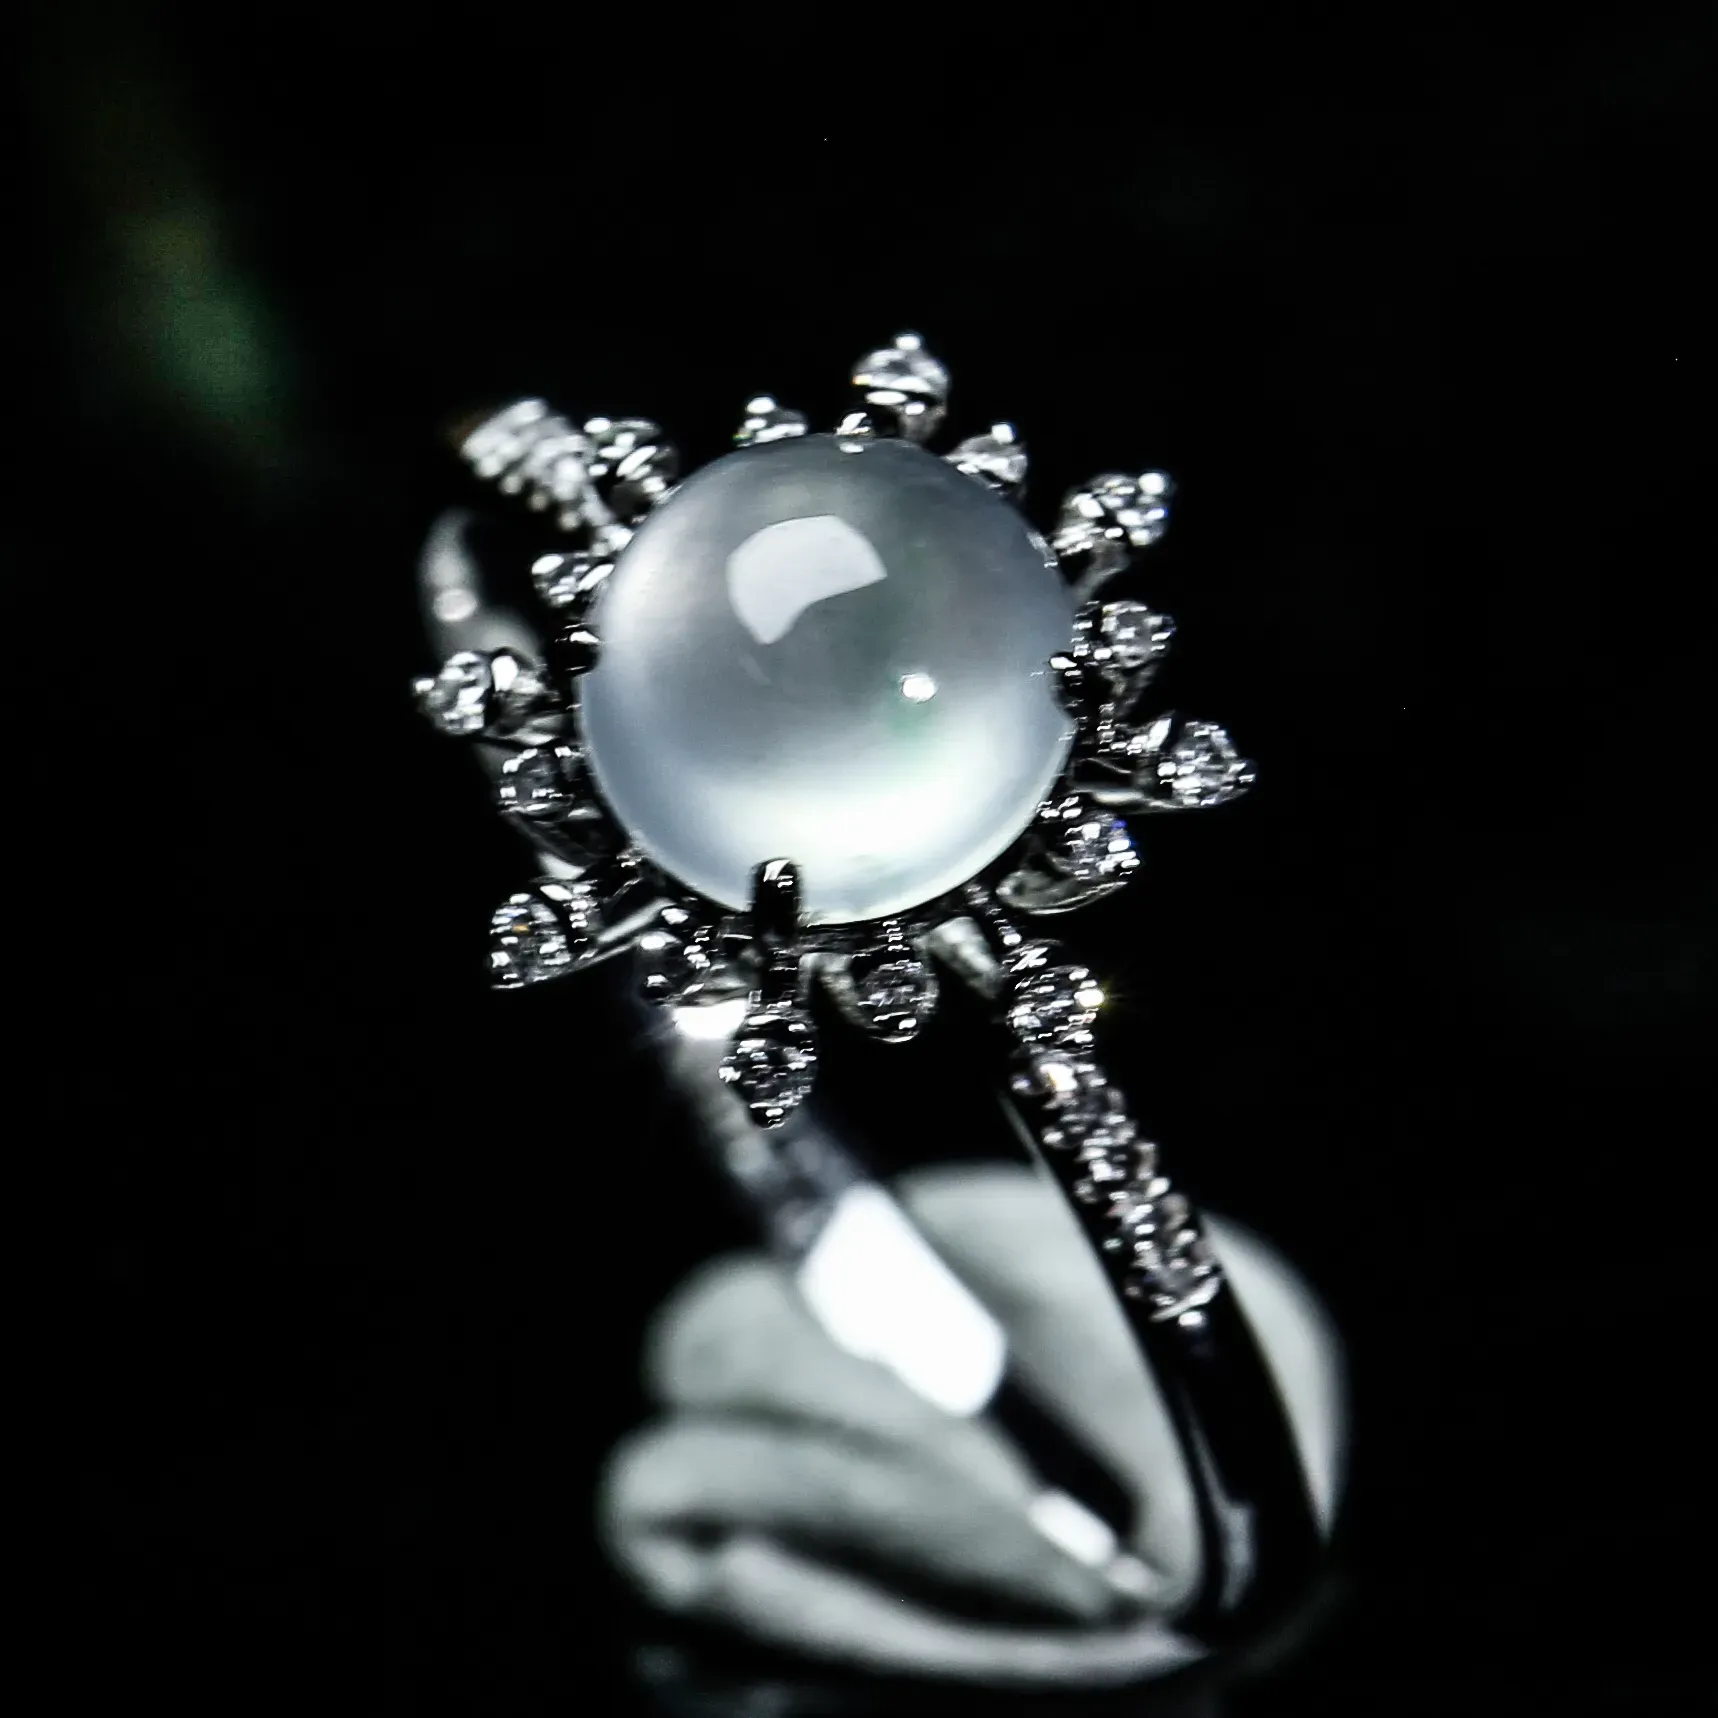 18K金镶嵌伴钻蛋面翡翠戒指，冰透水润，款式精美，上手效果时尚漂亮！尺寸17.2*10.8*7.9mm